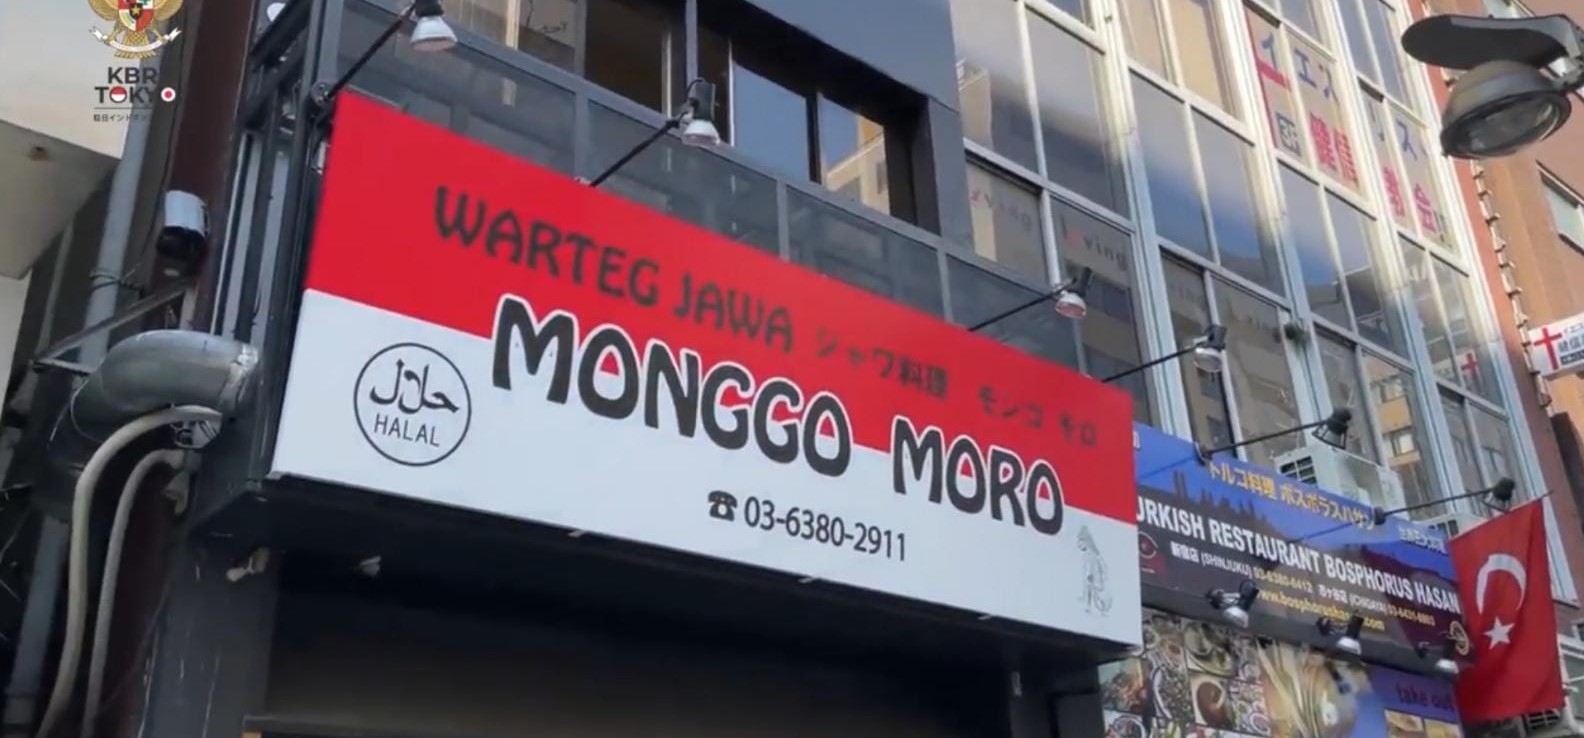 Warteg Monggo Moro